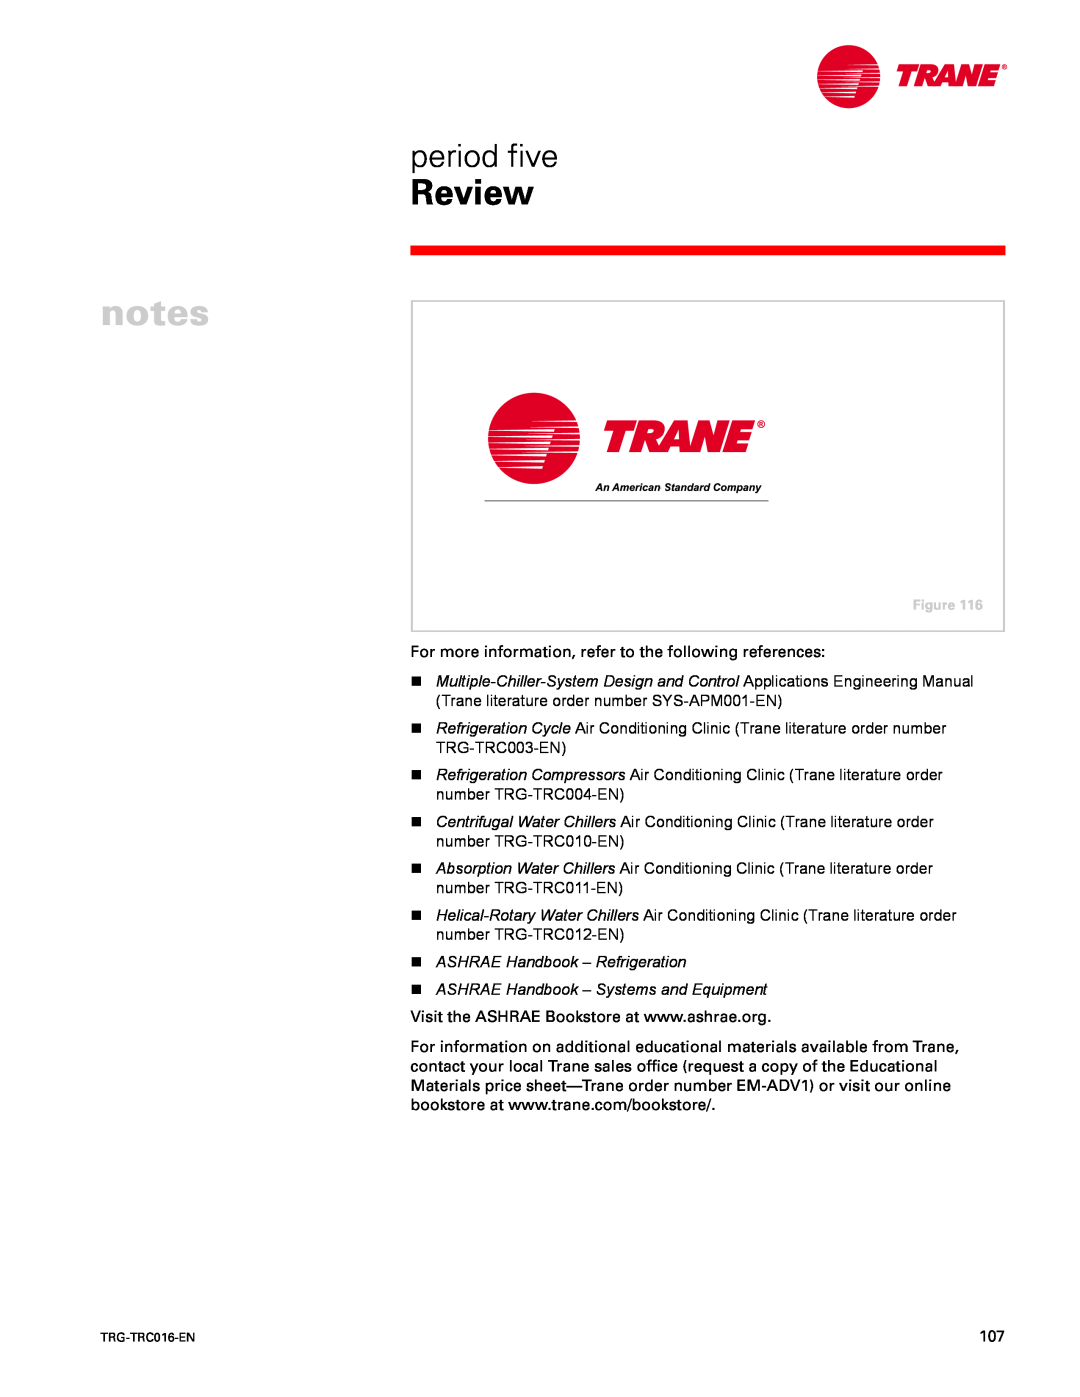 Trane TRG-TRC016-EN manual Review, period five, nASHRAE Handbook – Refrigeration, nASHRAE Handbook – Systems and Equipment 